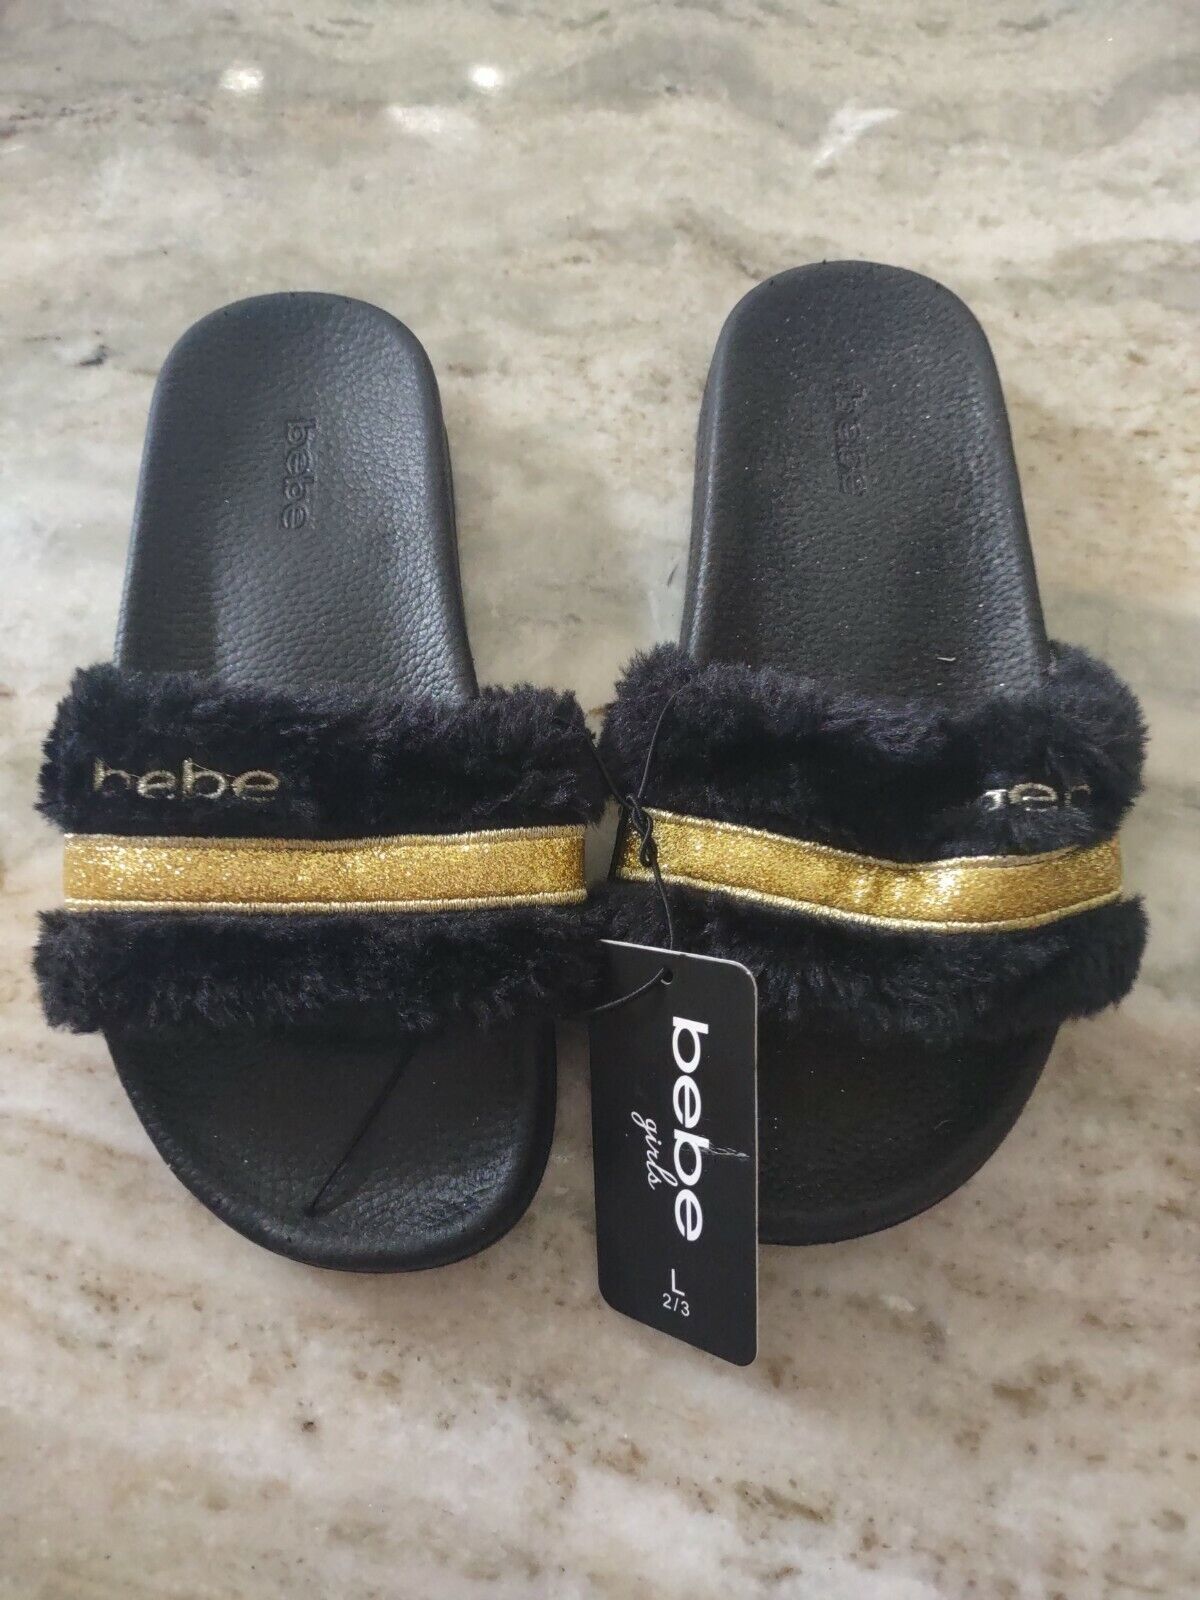 Bebe Size 2/3 Kids Girls Black Sandals-Brand New-SHIPS N 24 HOURS - $29.58